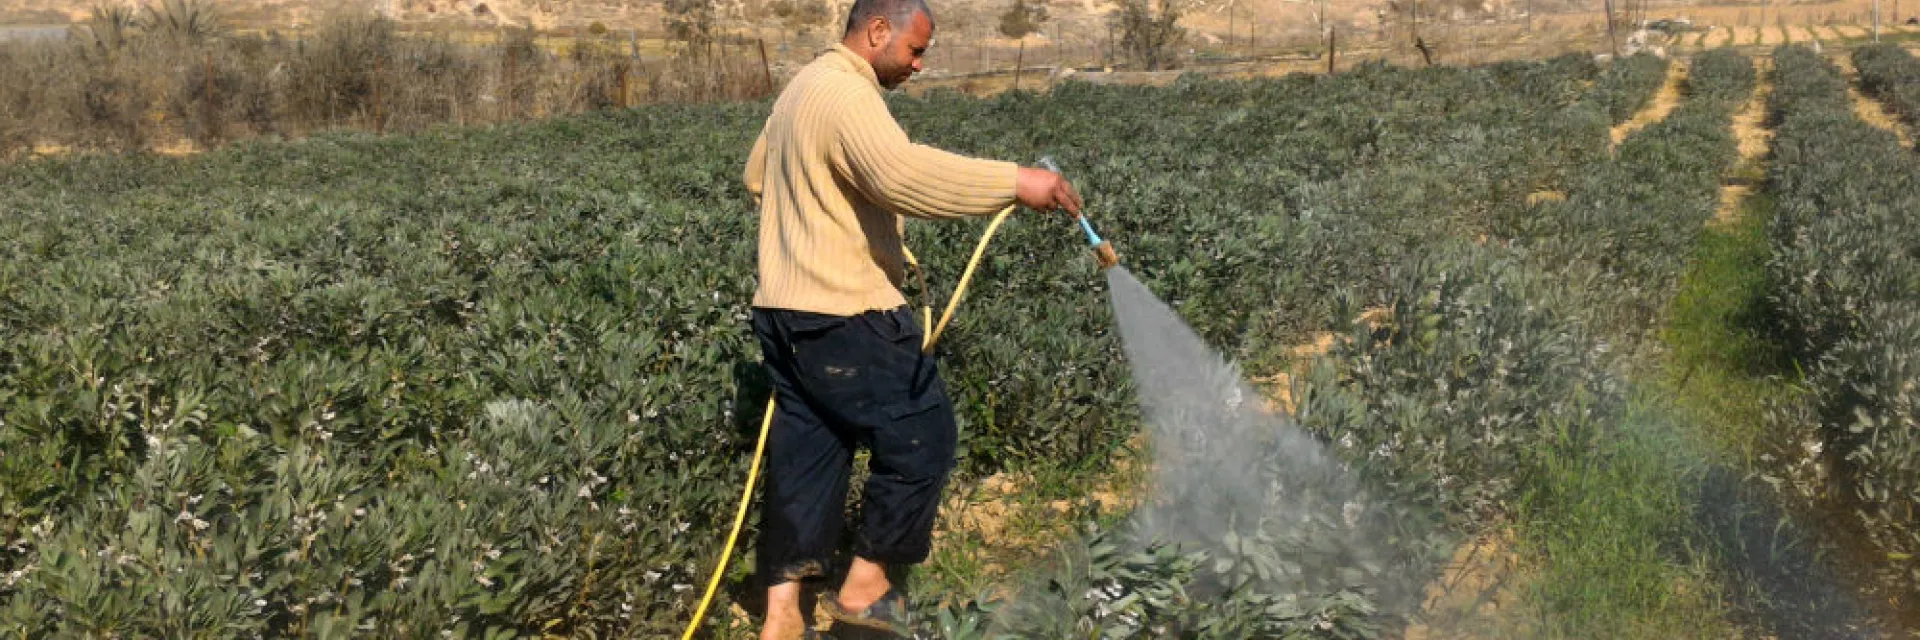 Farmer in Gaza washes his fava bean field after the spraying. Photo by Muhammad Sa’id, B’Tselem, 23 Jan. 2017 